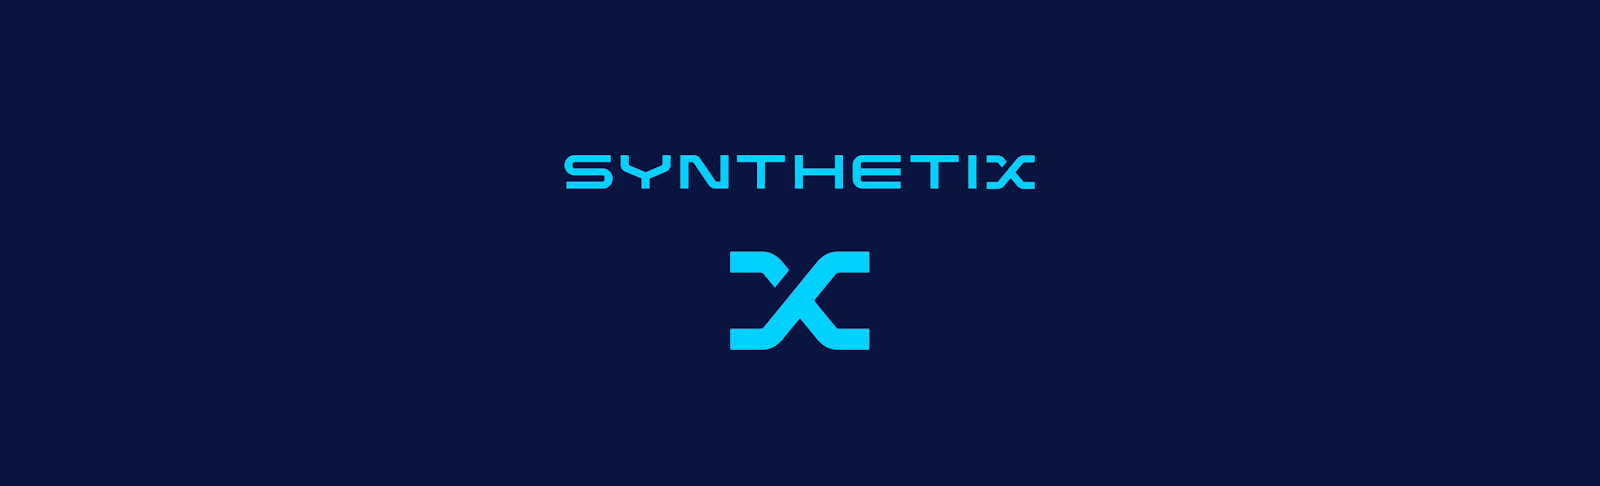 Synthetix Banner